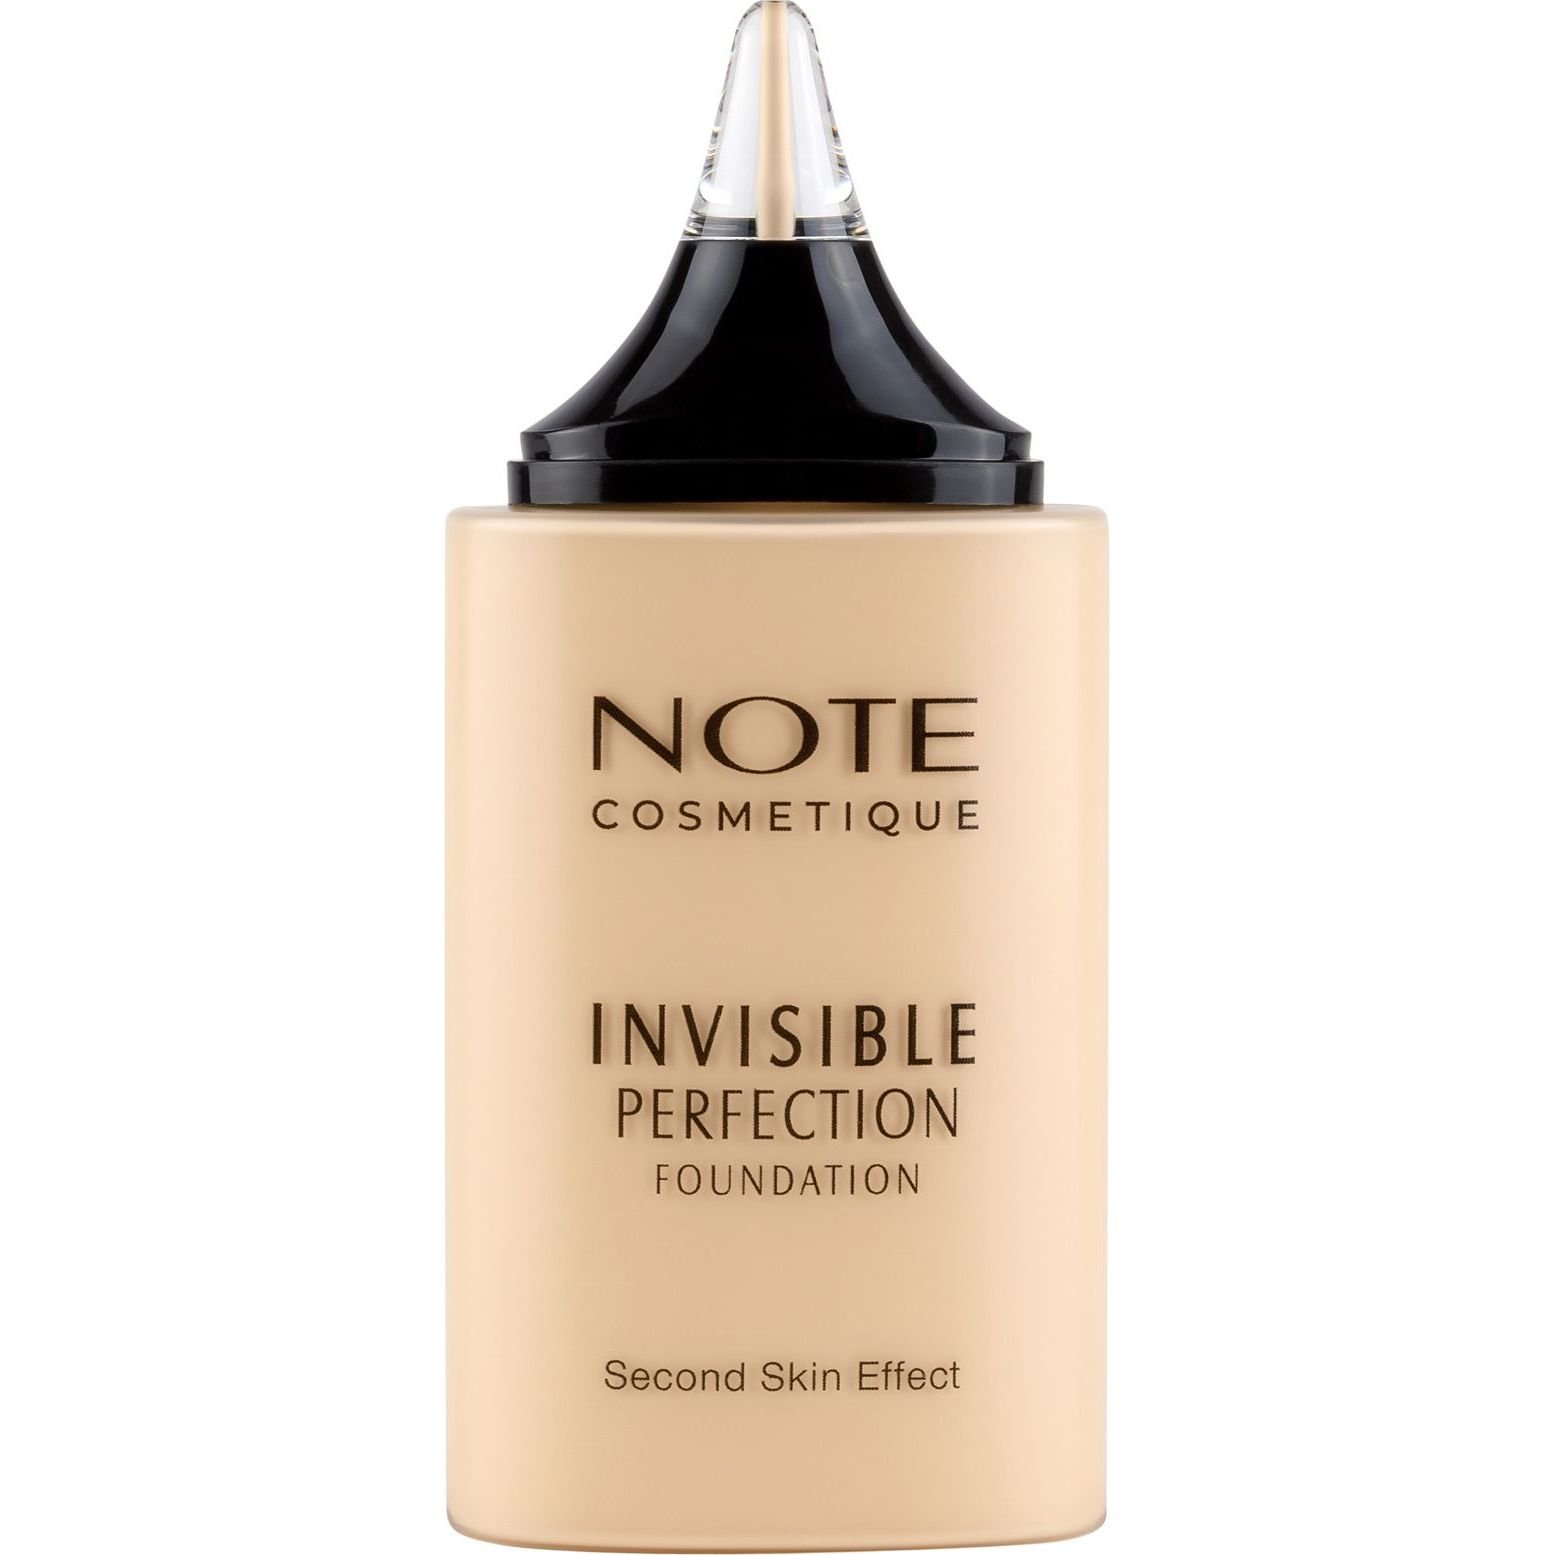 Тональная основа Note Cosmetique Invisible Perfection Foundation тон 100 (Bare Sand) 35 мл - фото 2